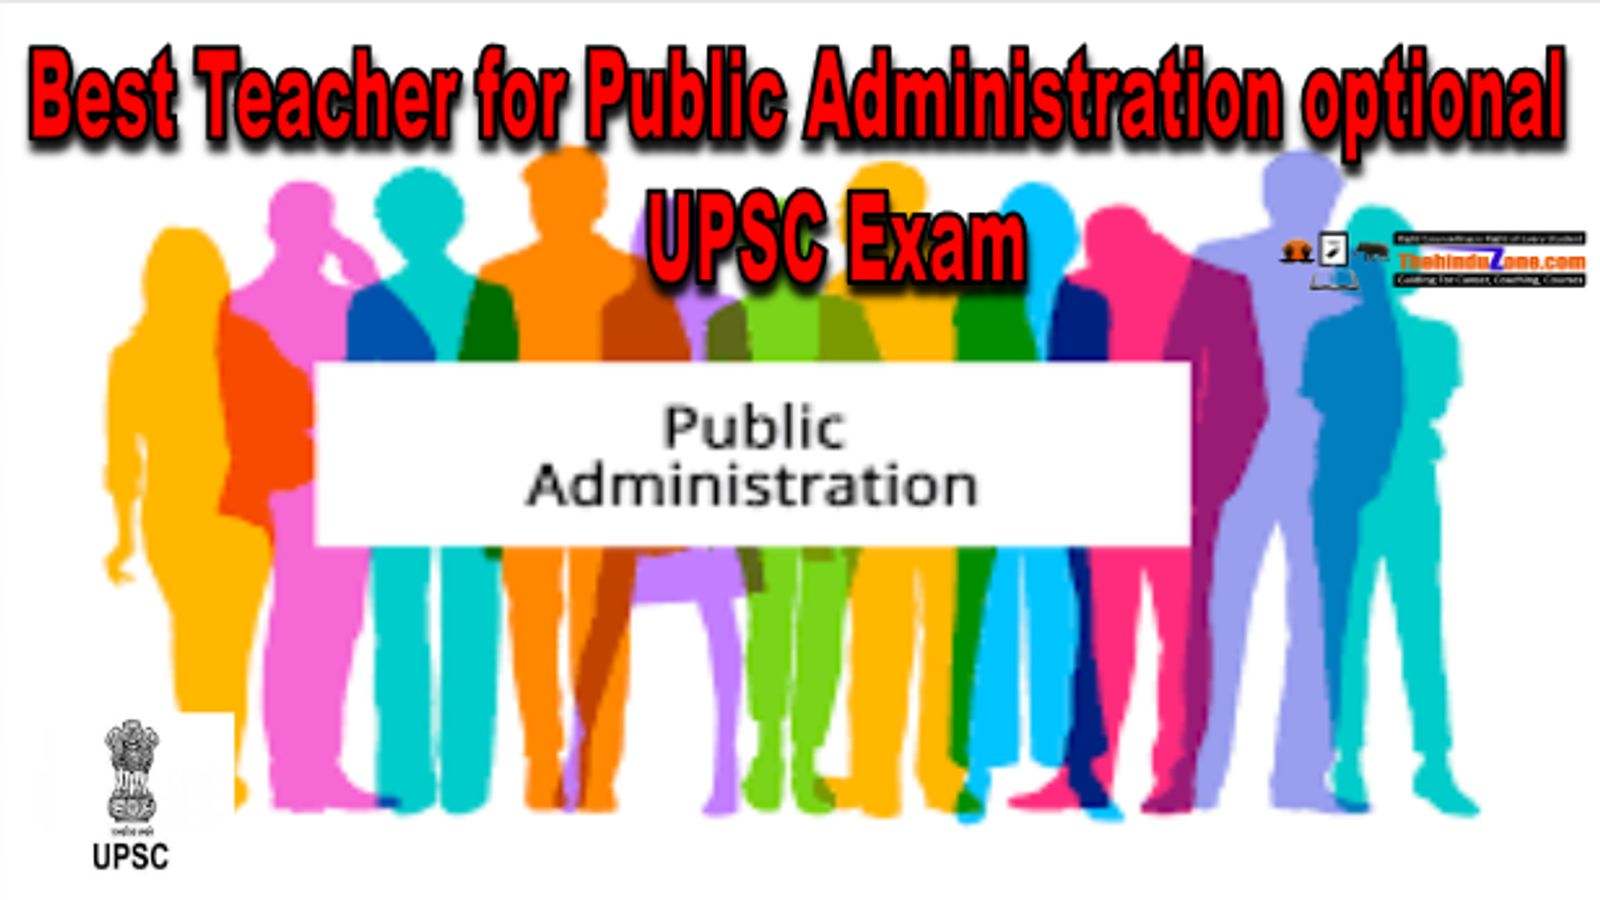 Best Teacher for Public Administration Optional UPSC Exam